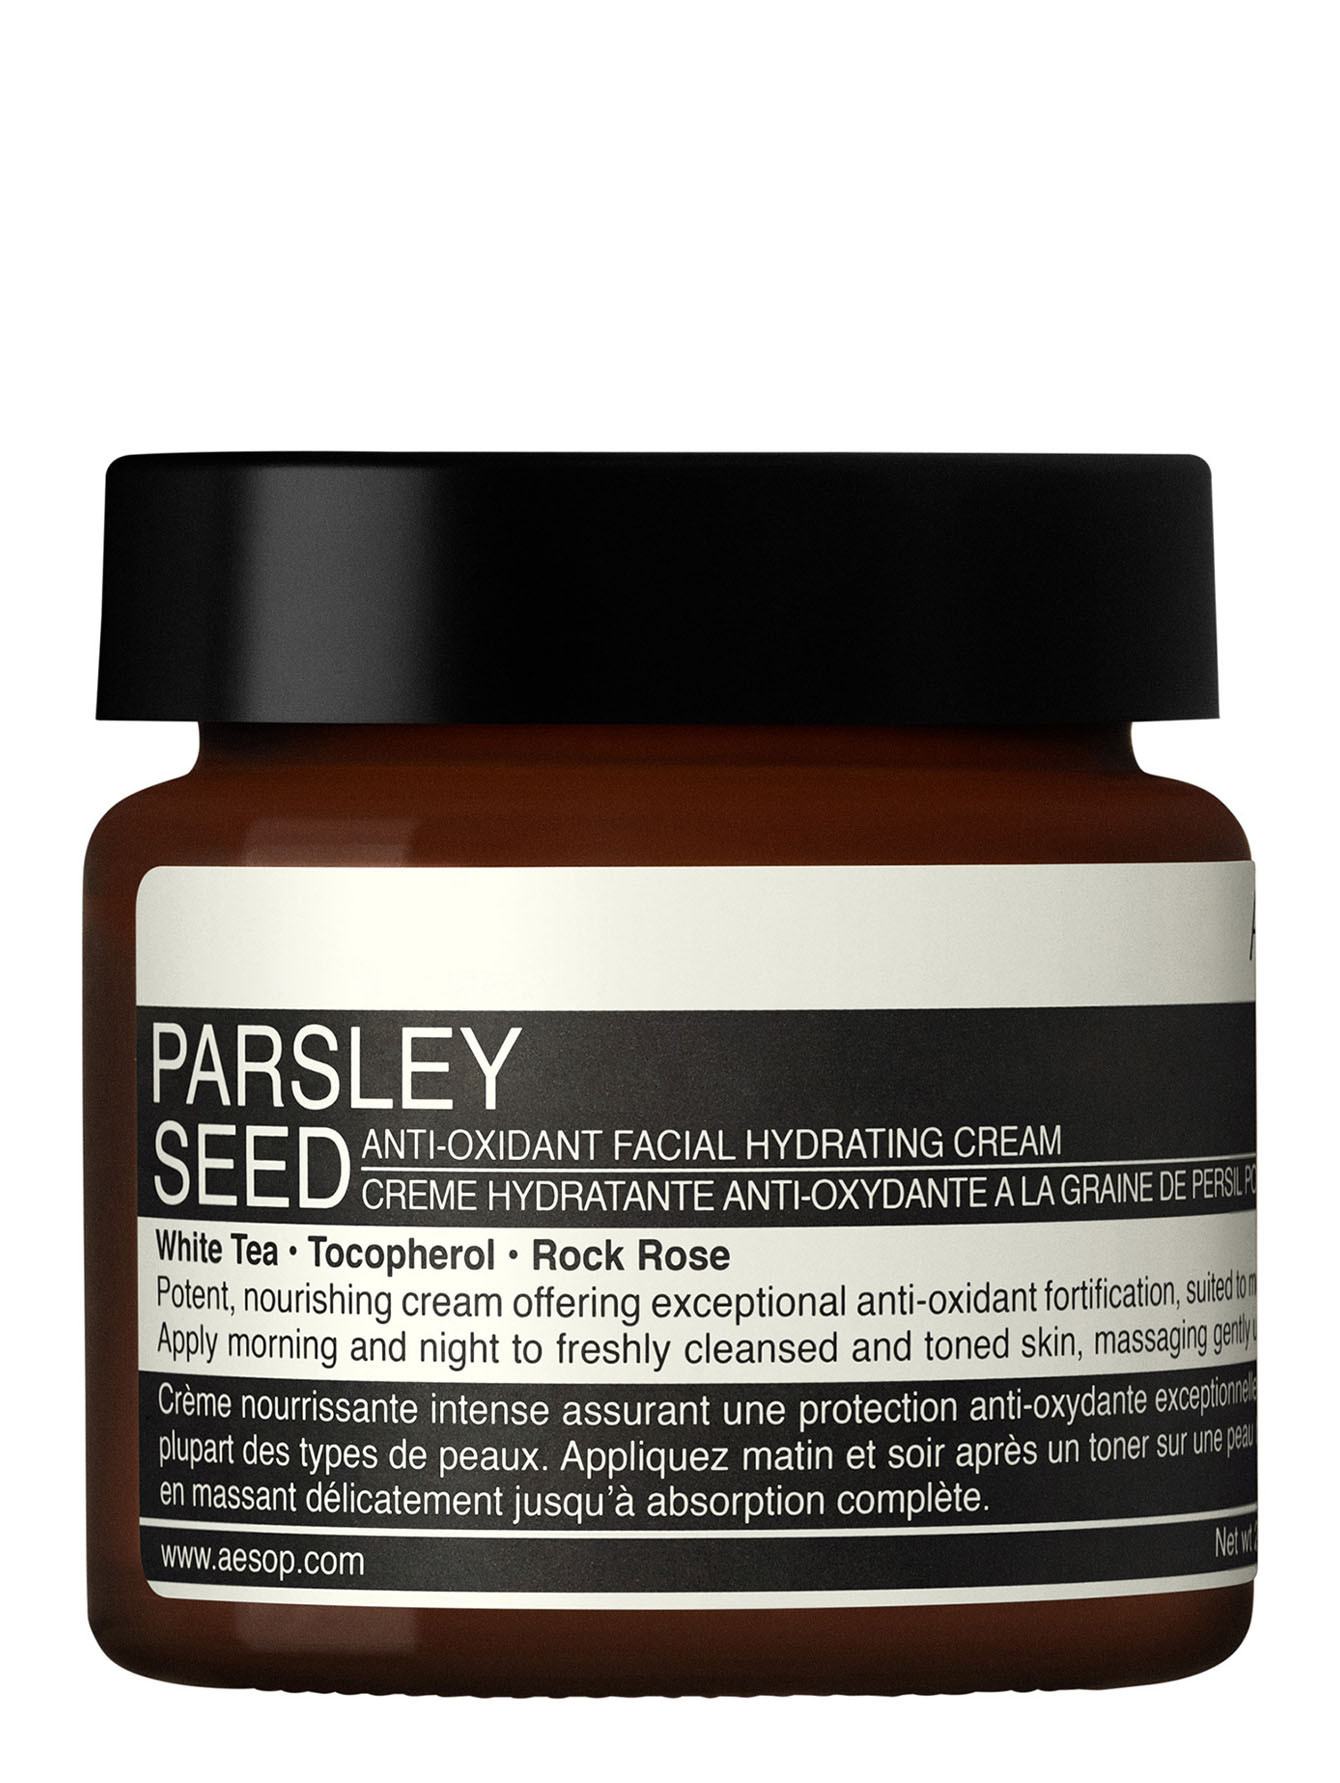 Крем для лица с антиоксидантами Parsley Seed, 60 мл - Общий вид